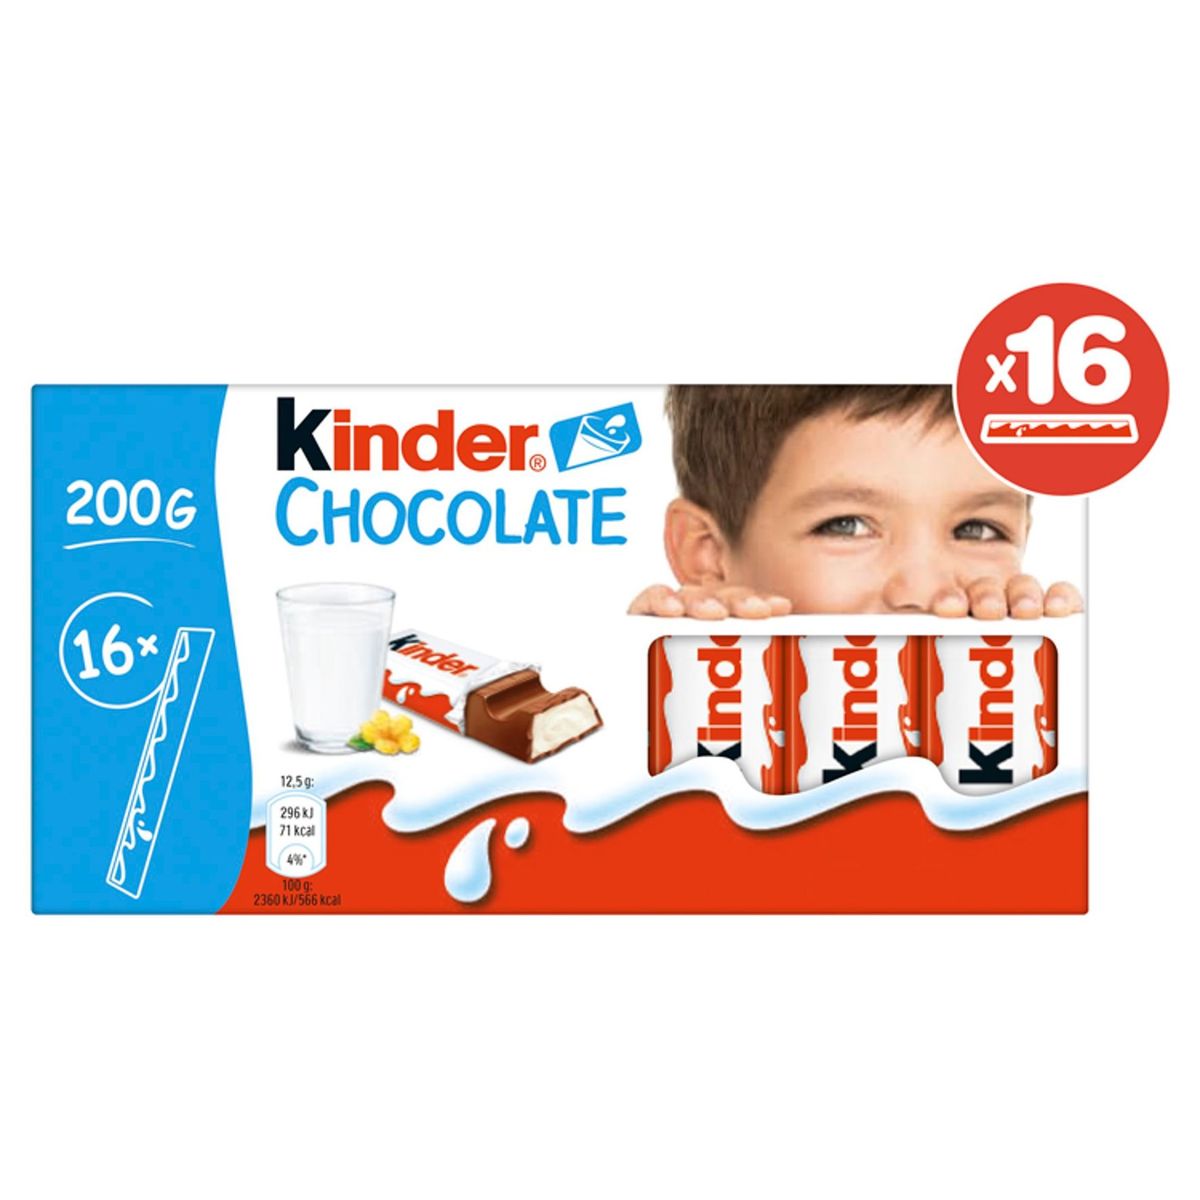 Kinder Chocolate 16 Reepjes 200 g